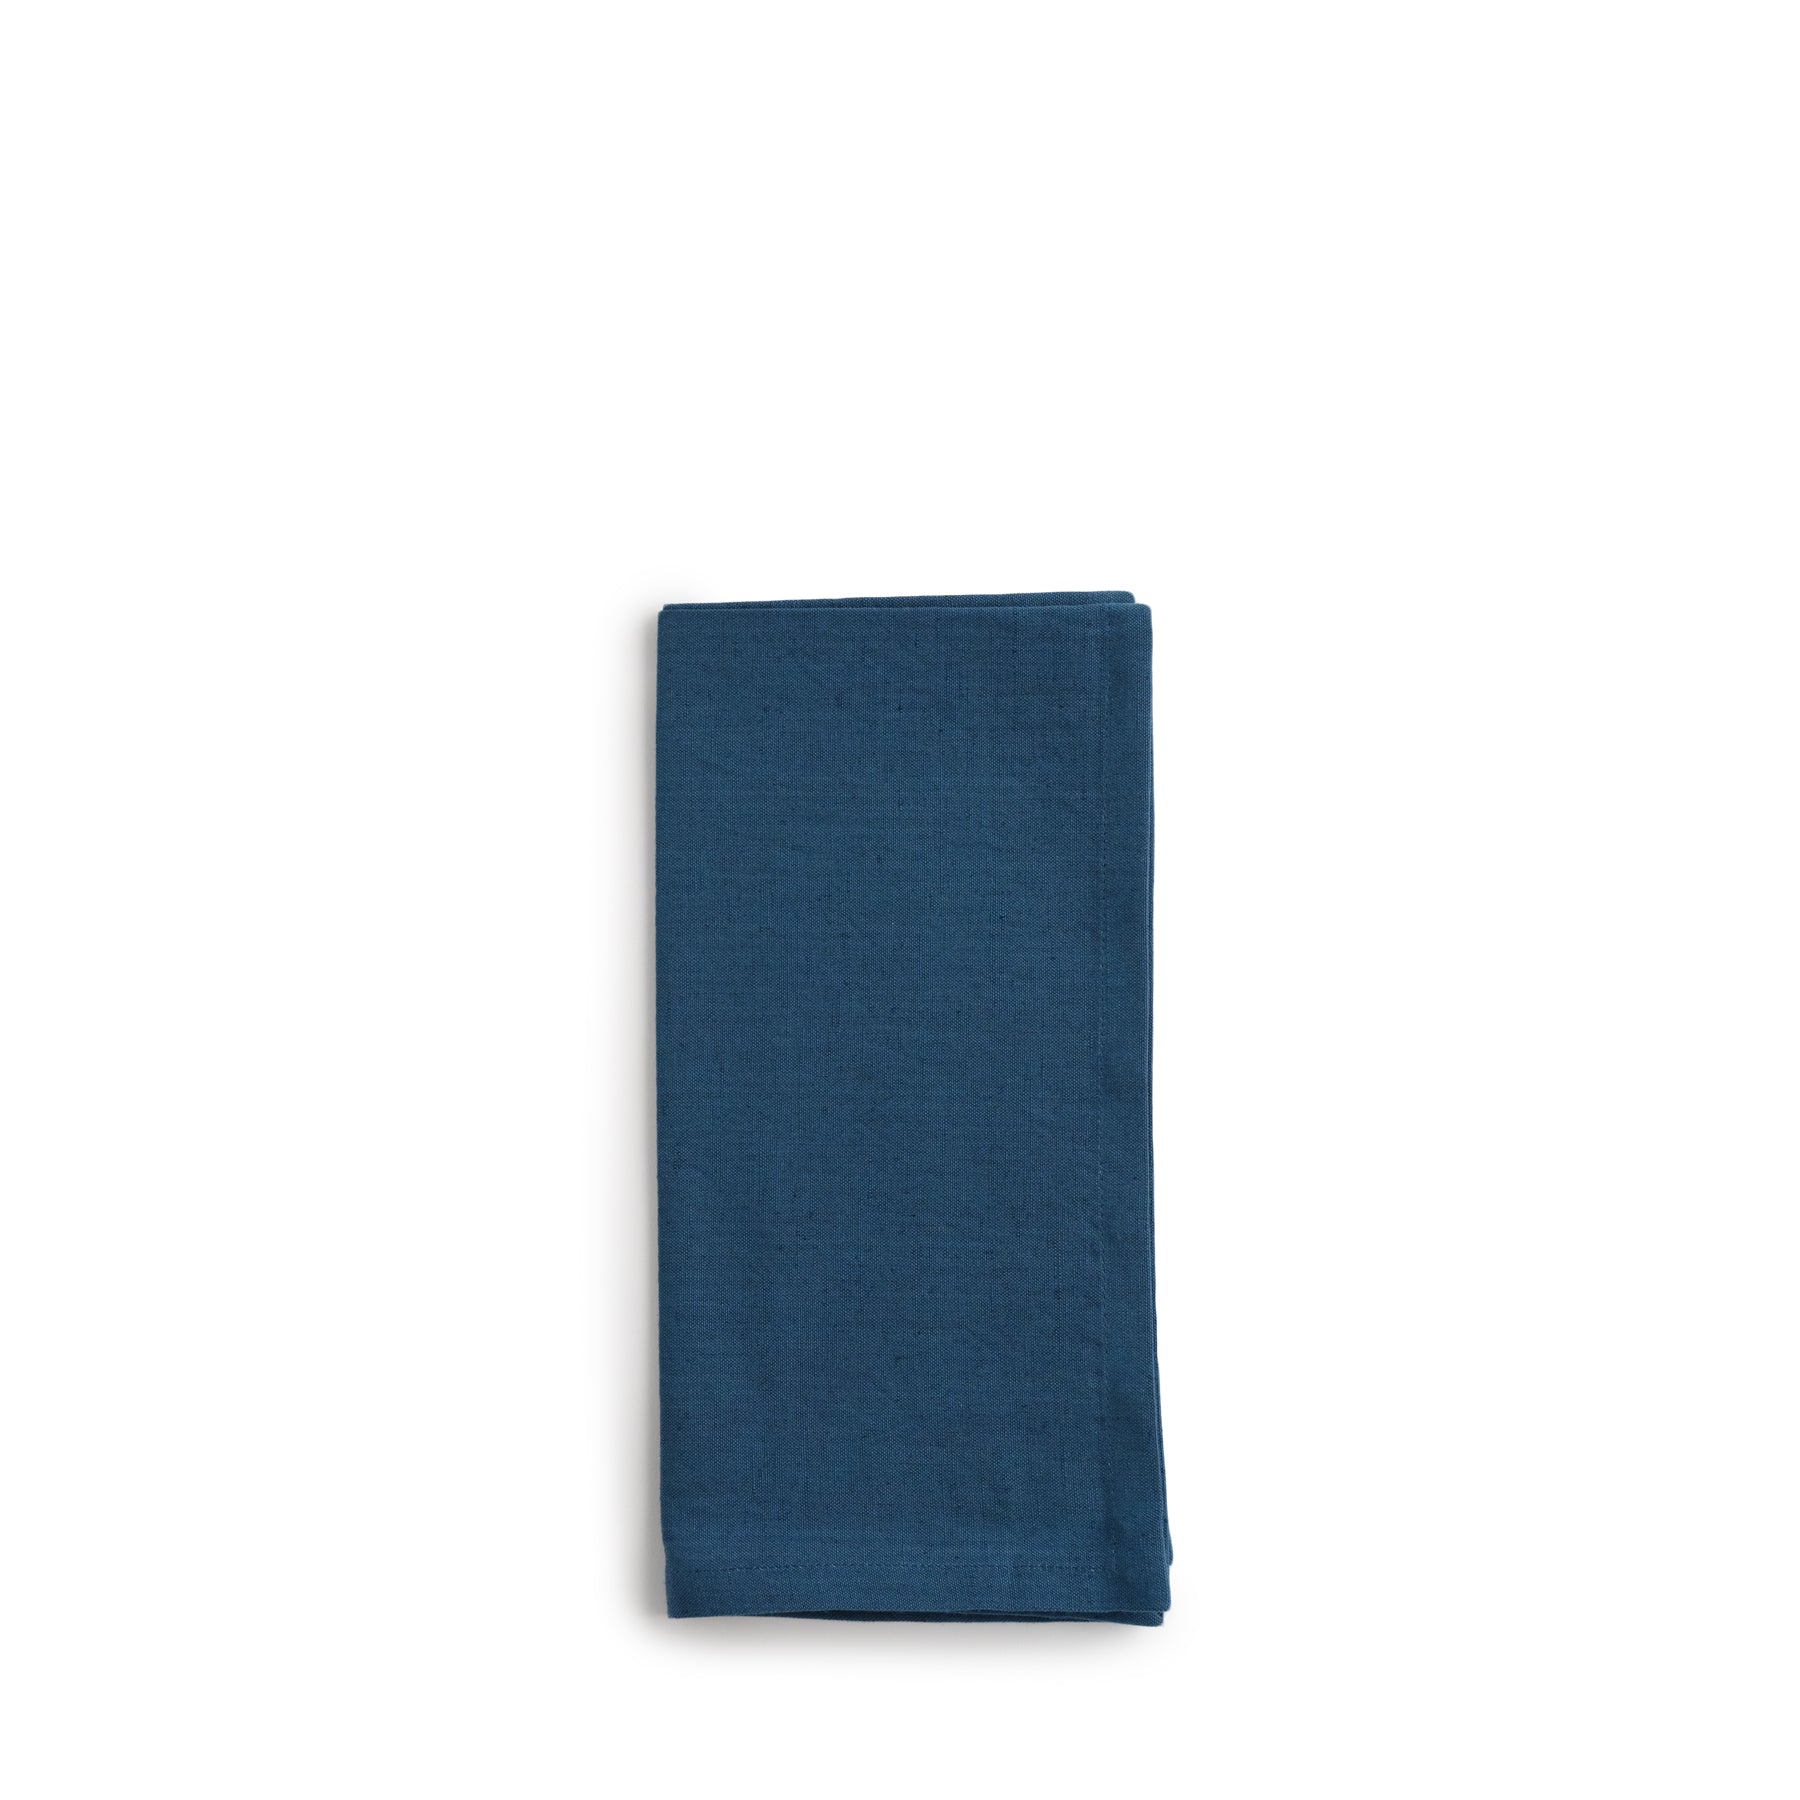 Napkin in Blue (Set of 4) Zoom Image 1